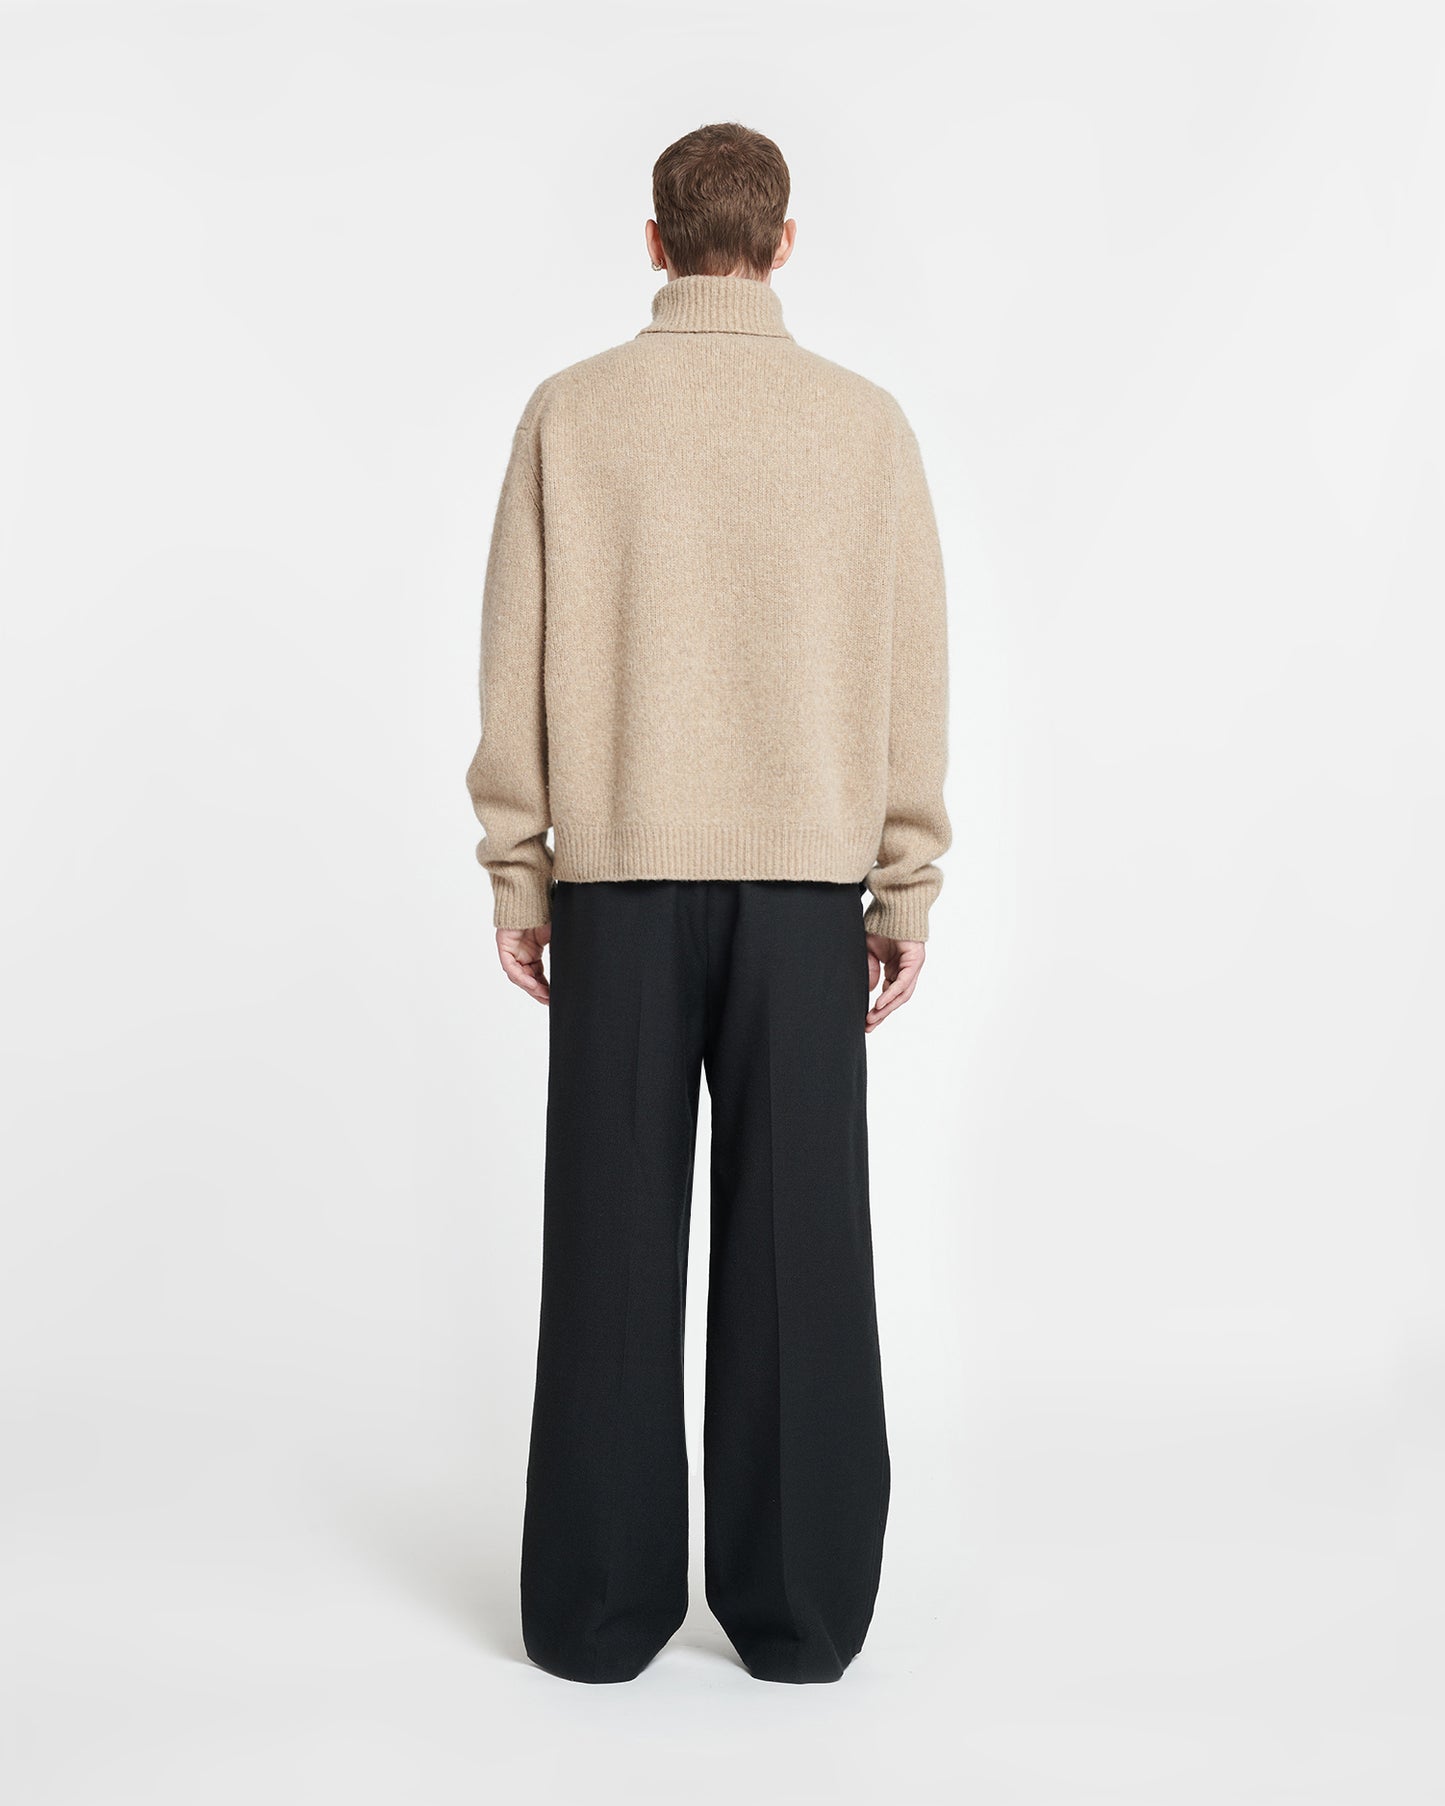 Nevin - Brushed Merino Turtleneck Sweater - Oatmeal